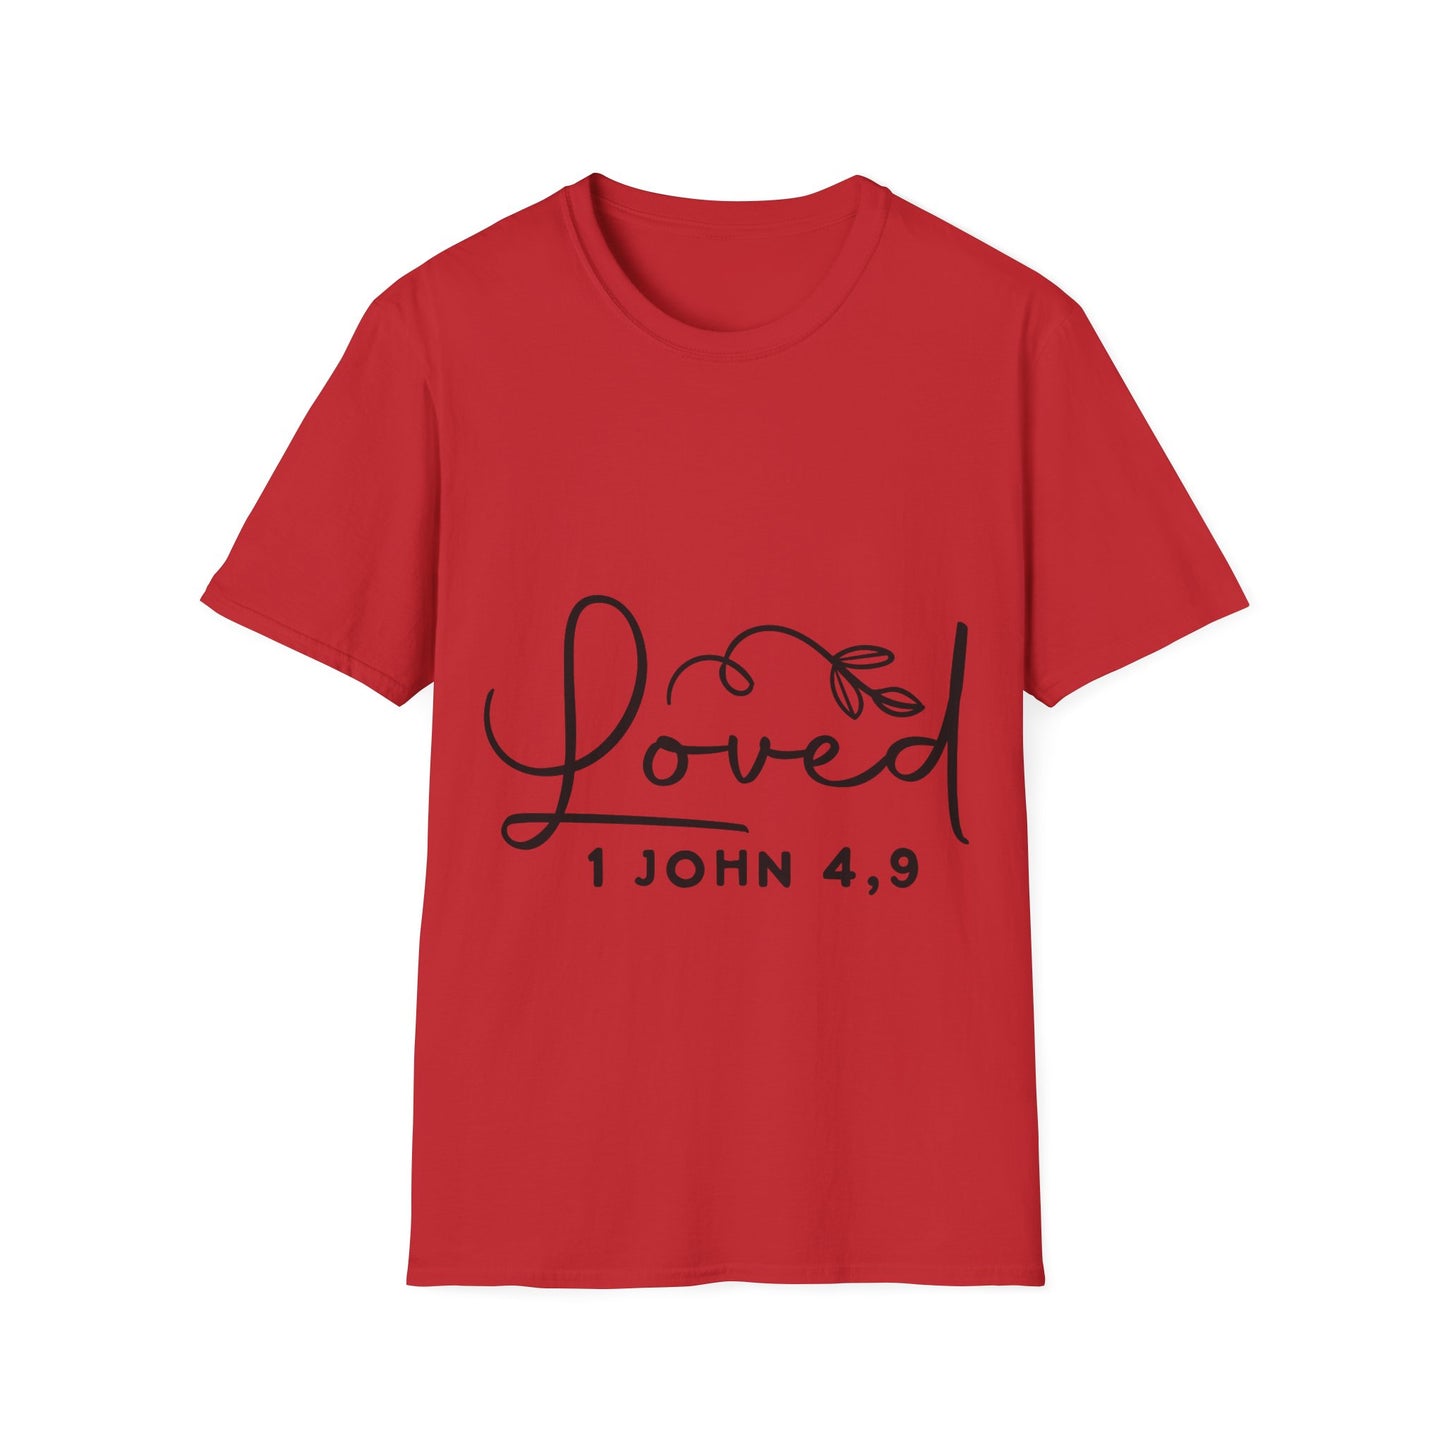 Loved 1 John 4,9 Triple Viking T-Shirt